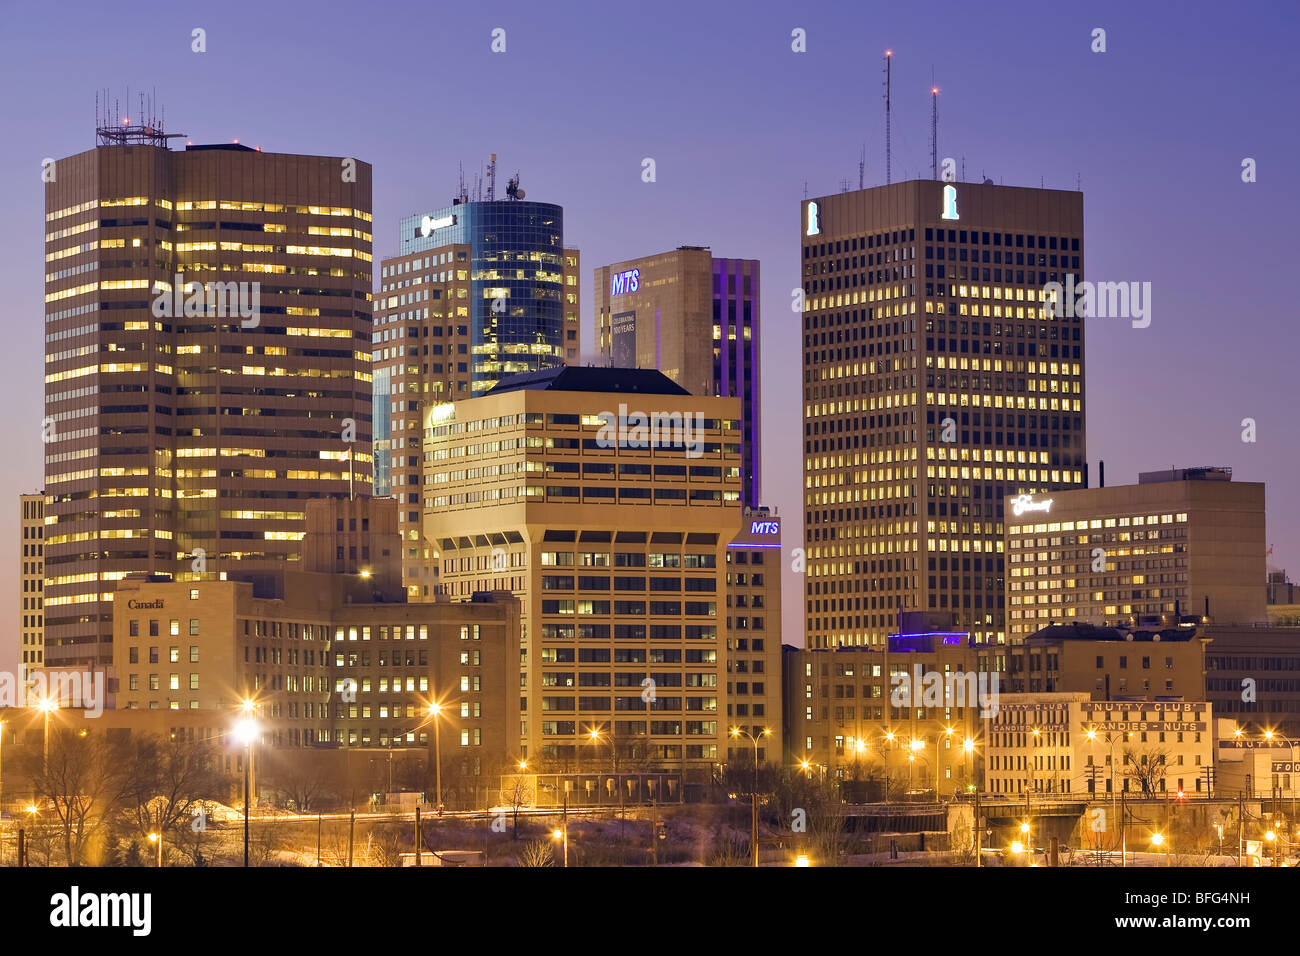 Skyline of downtown Winnipeg, Manitoba, Canada at night, looking towards Portage and Main Street. Stock Photo